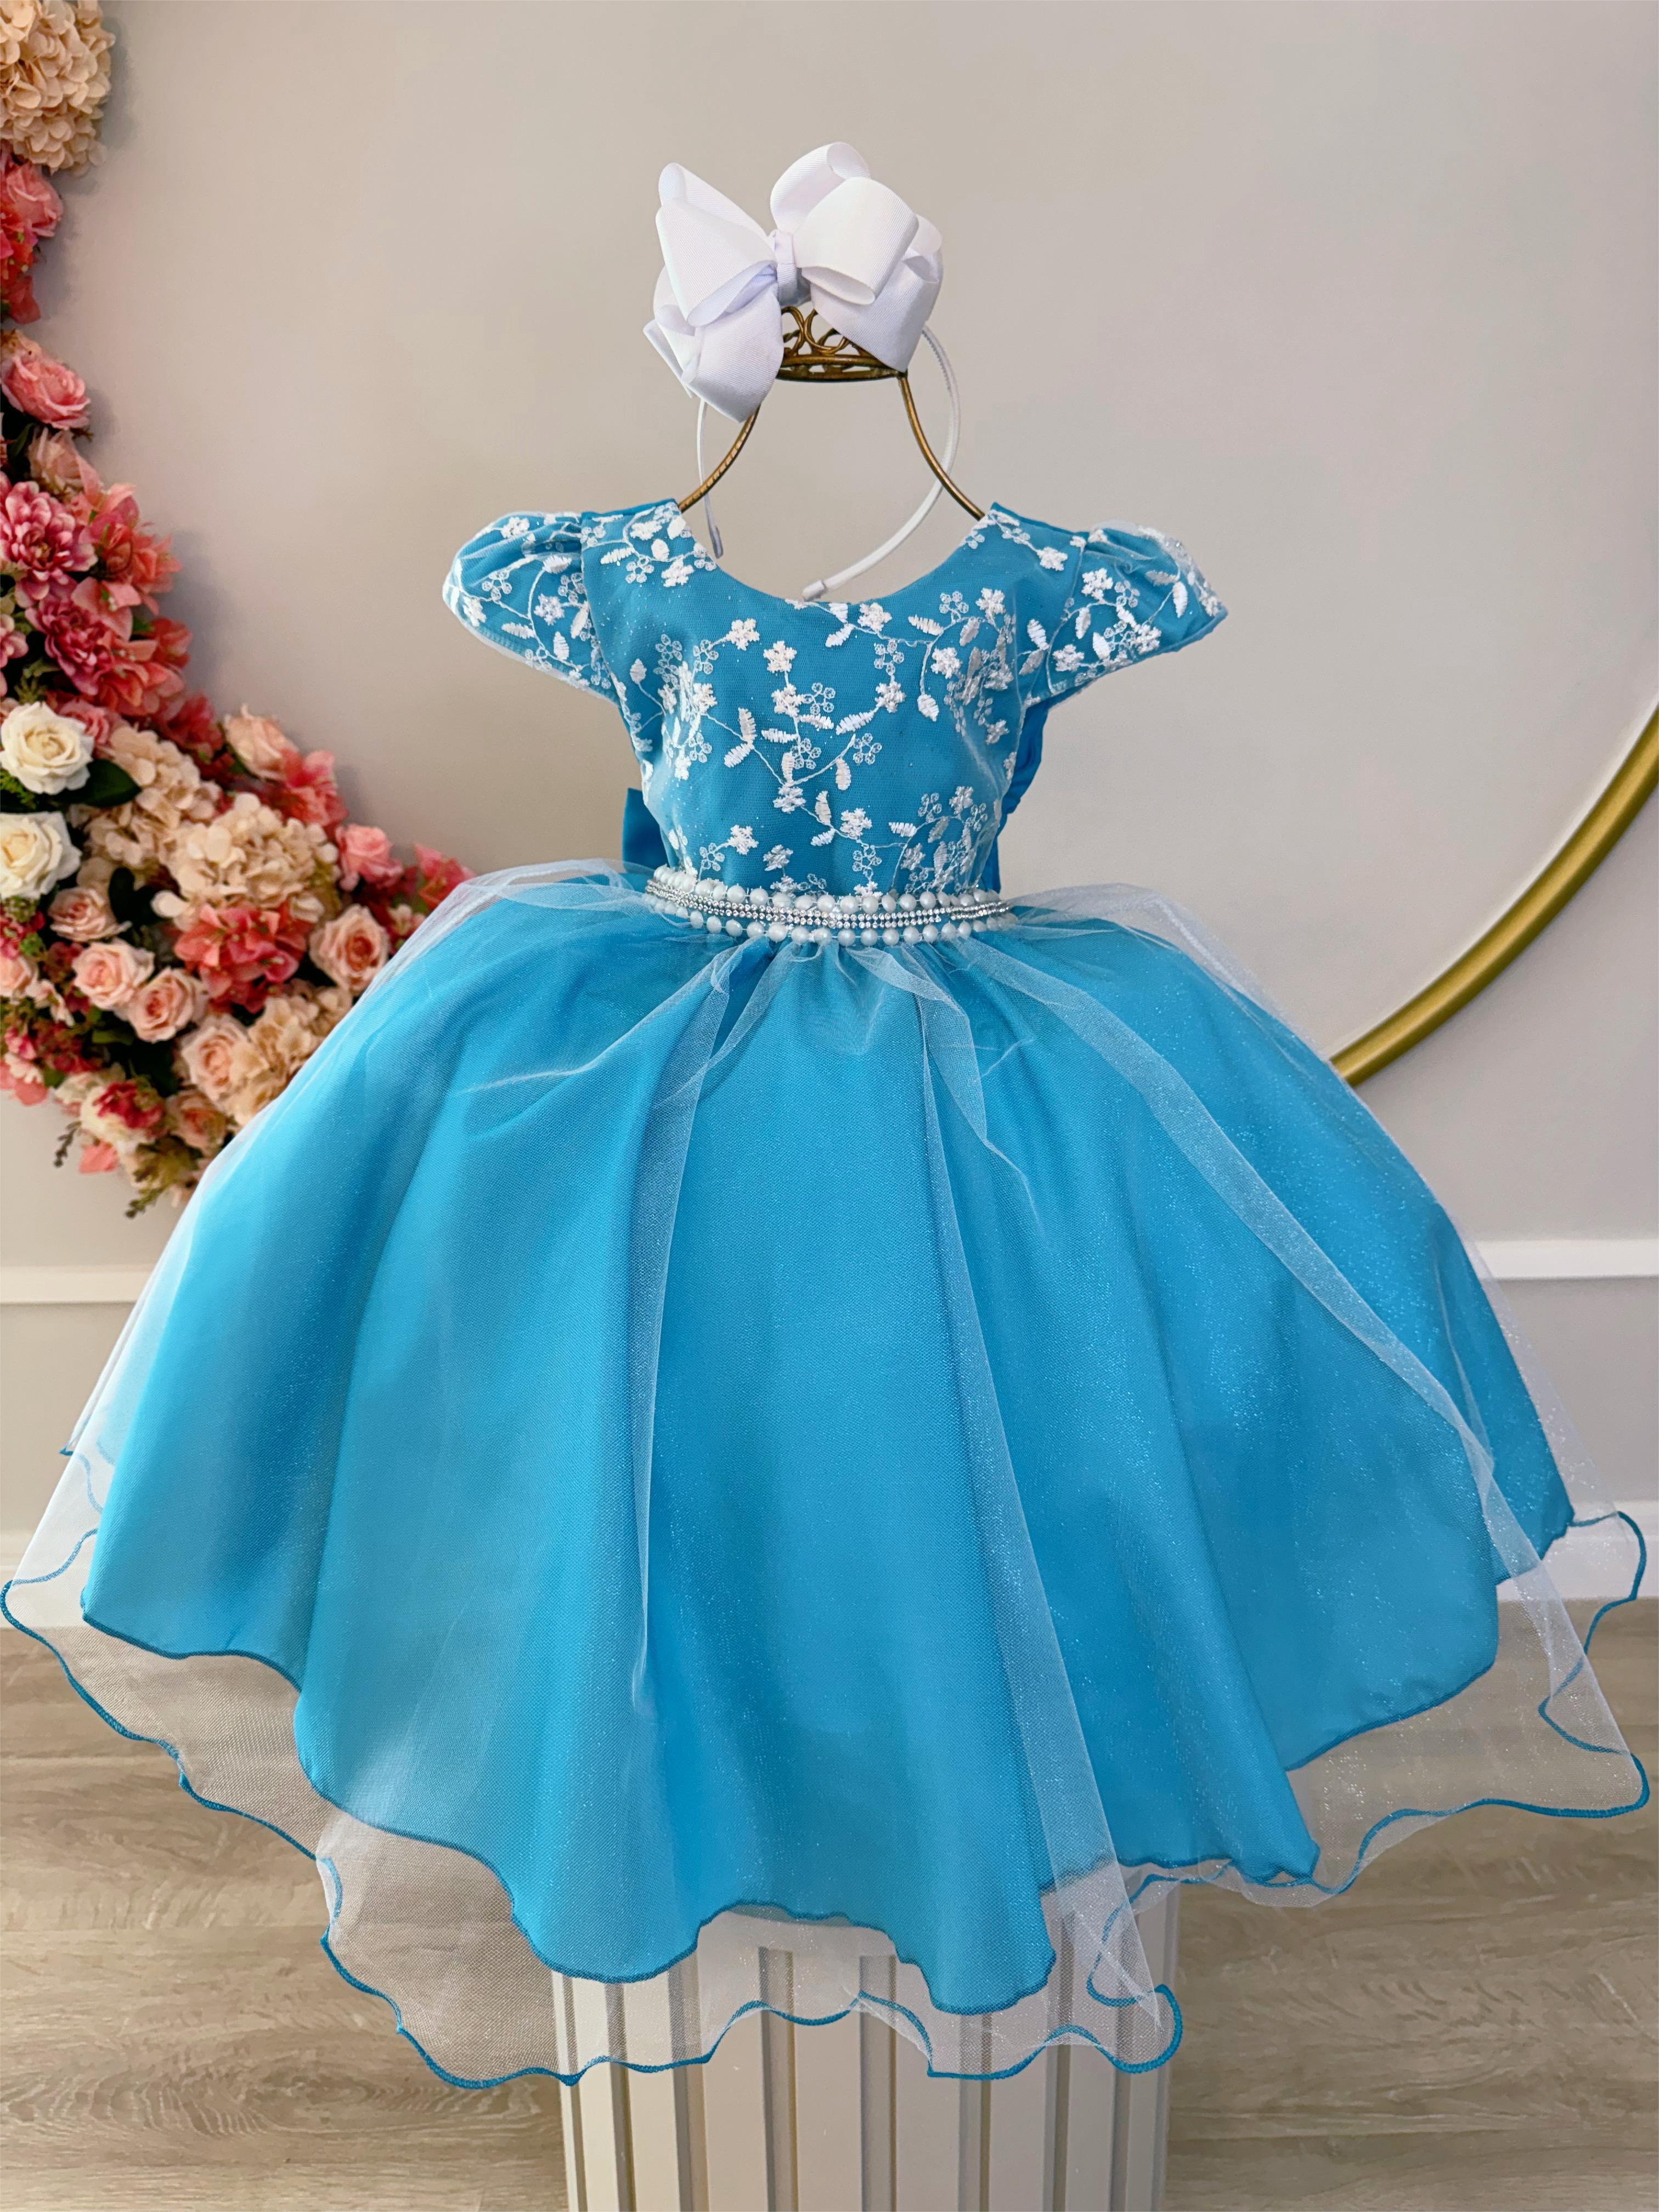 Vestido Infantil Azul Tiffany C/ Renda e Pérolas Strass Luxo